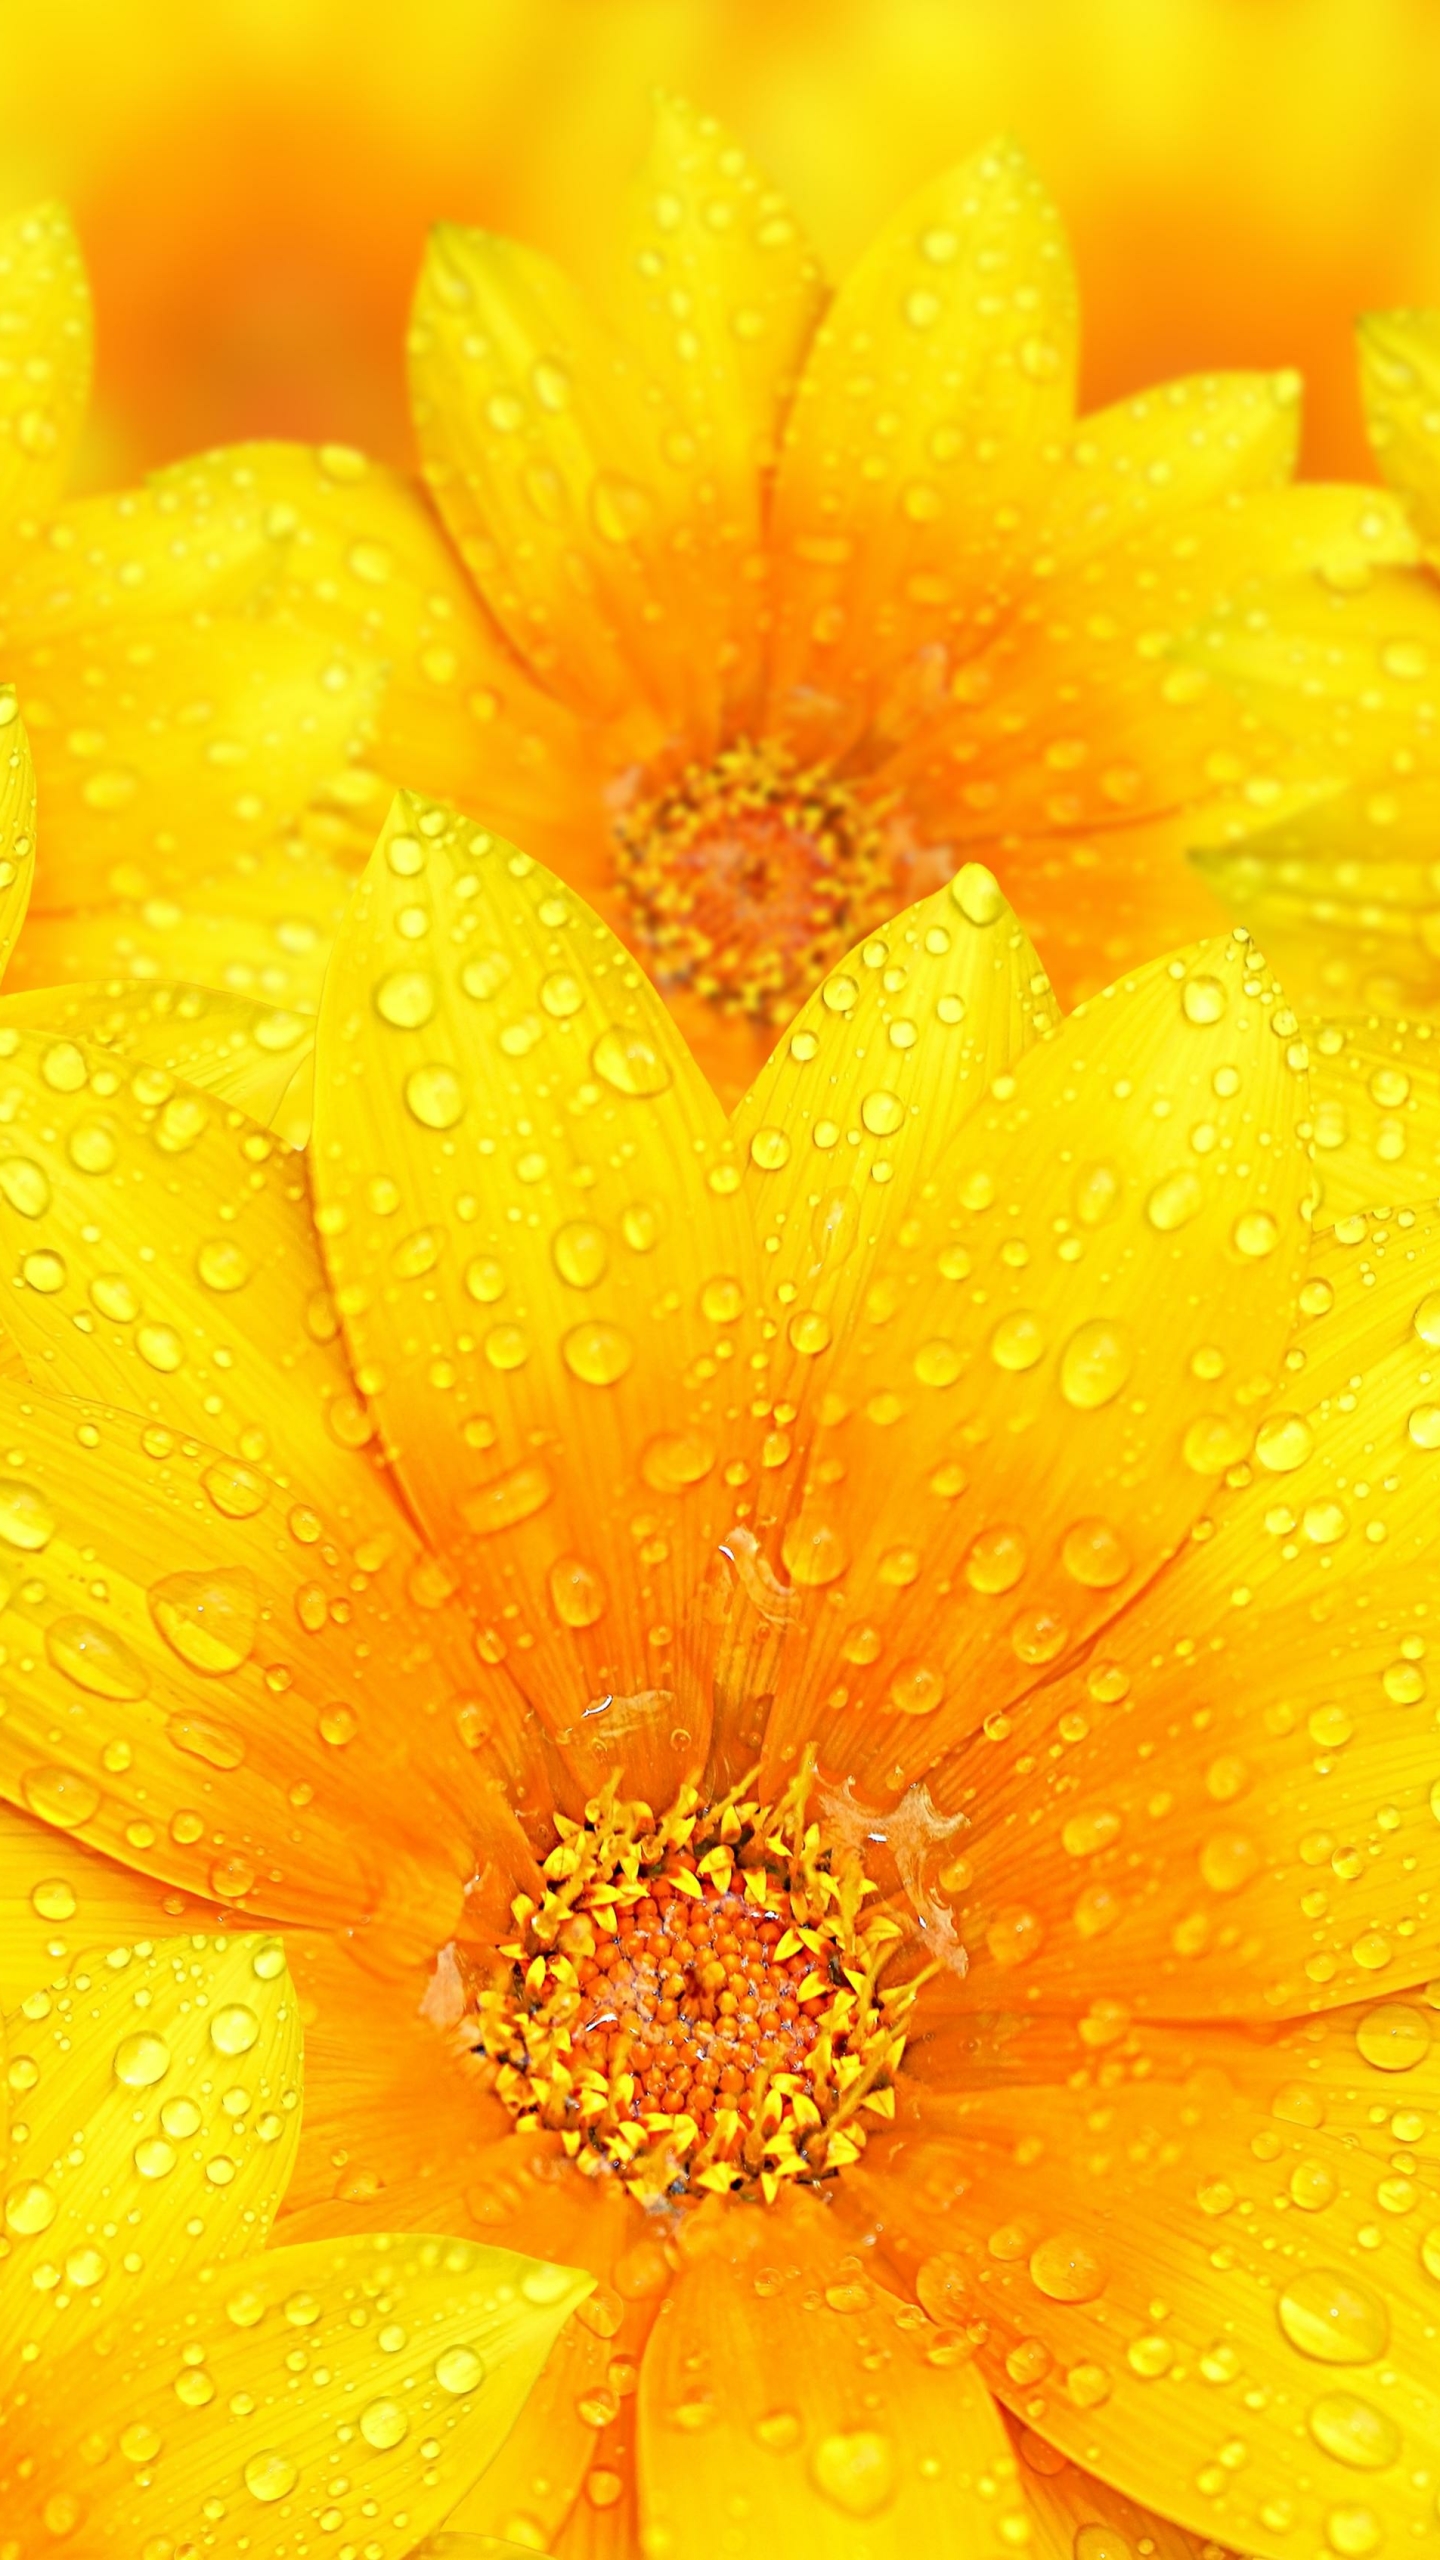 Raindrops on yellow flowers